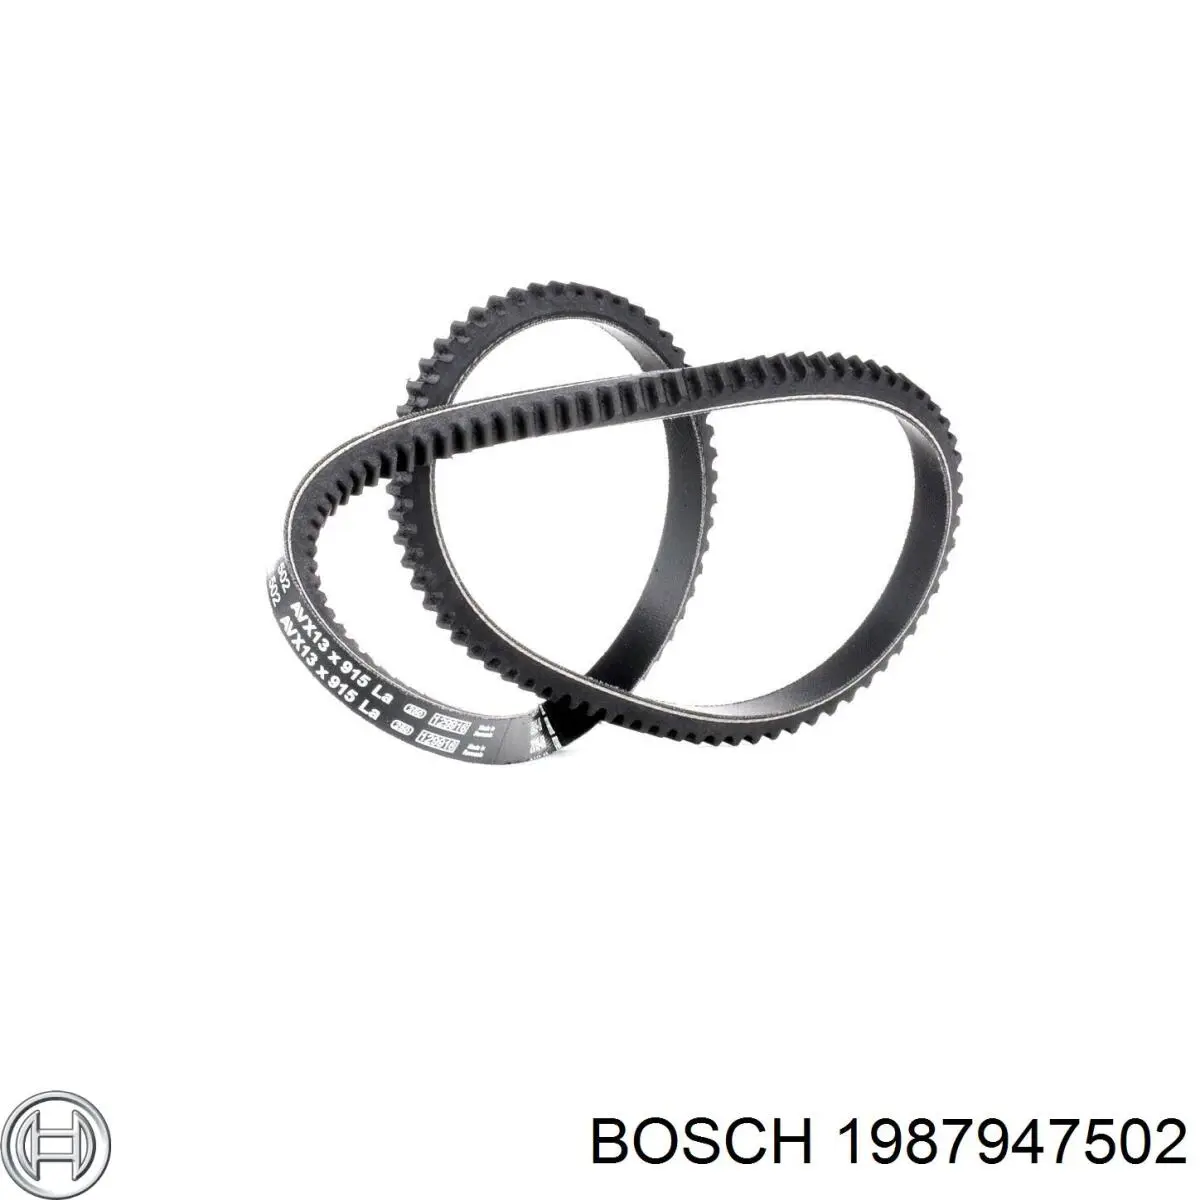 1987947502 Bosch correa trapezoidal